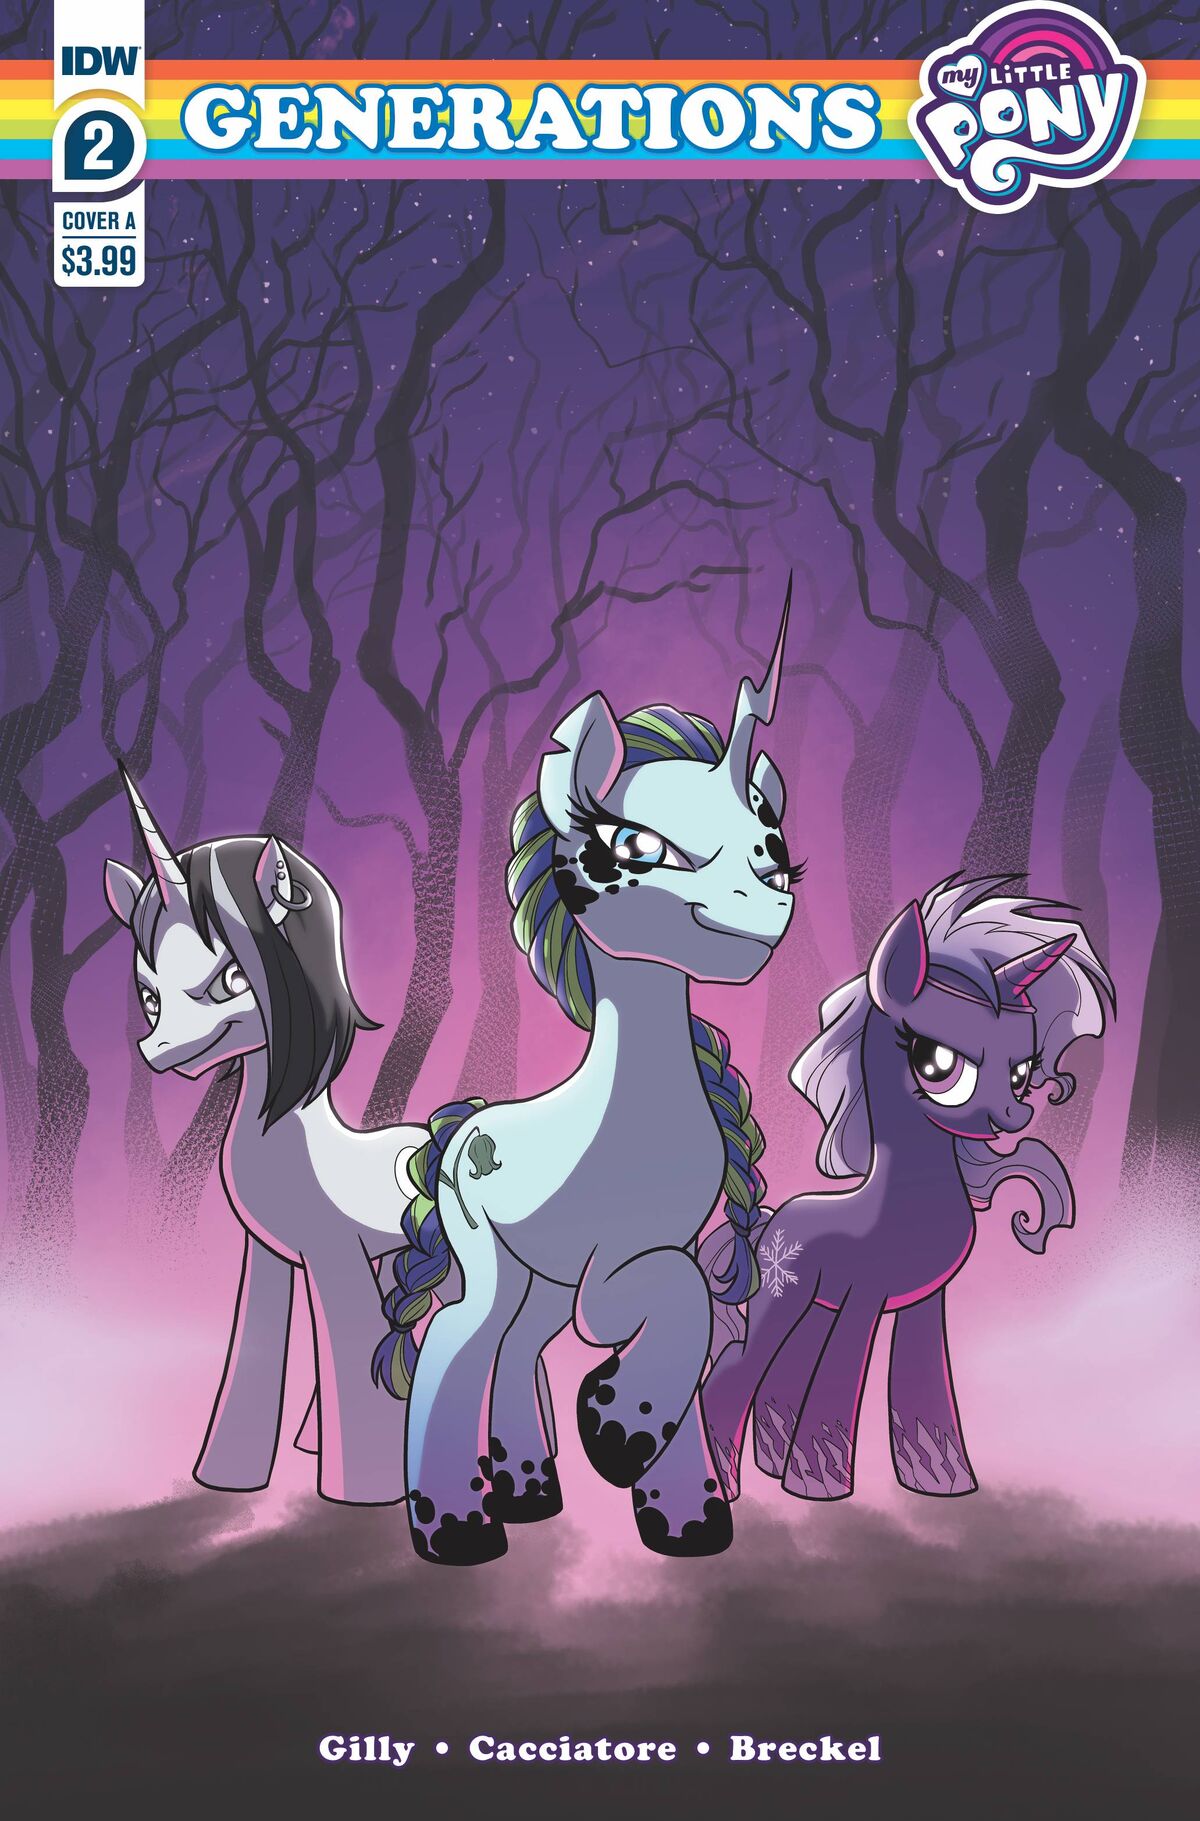 Medic bølge Mudret My Little Pony: Generations Issue 2 | My Little Pony Friendship is Magic  Wiki | Fandom